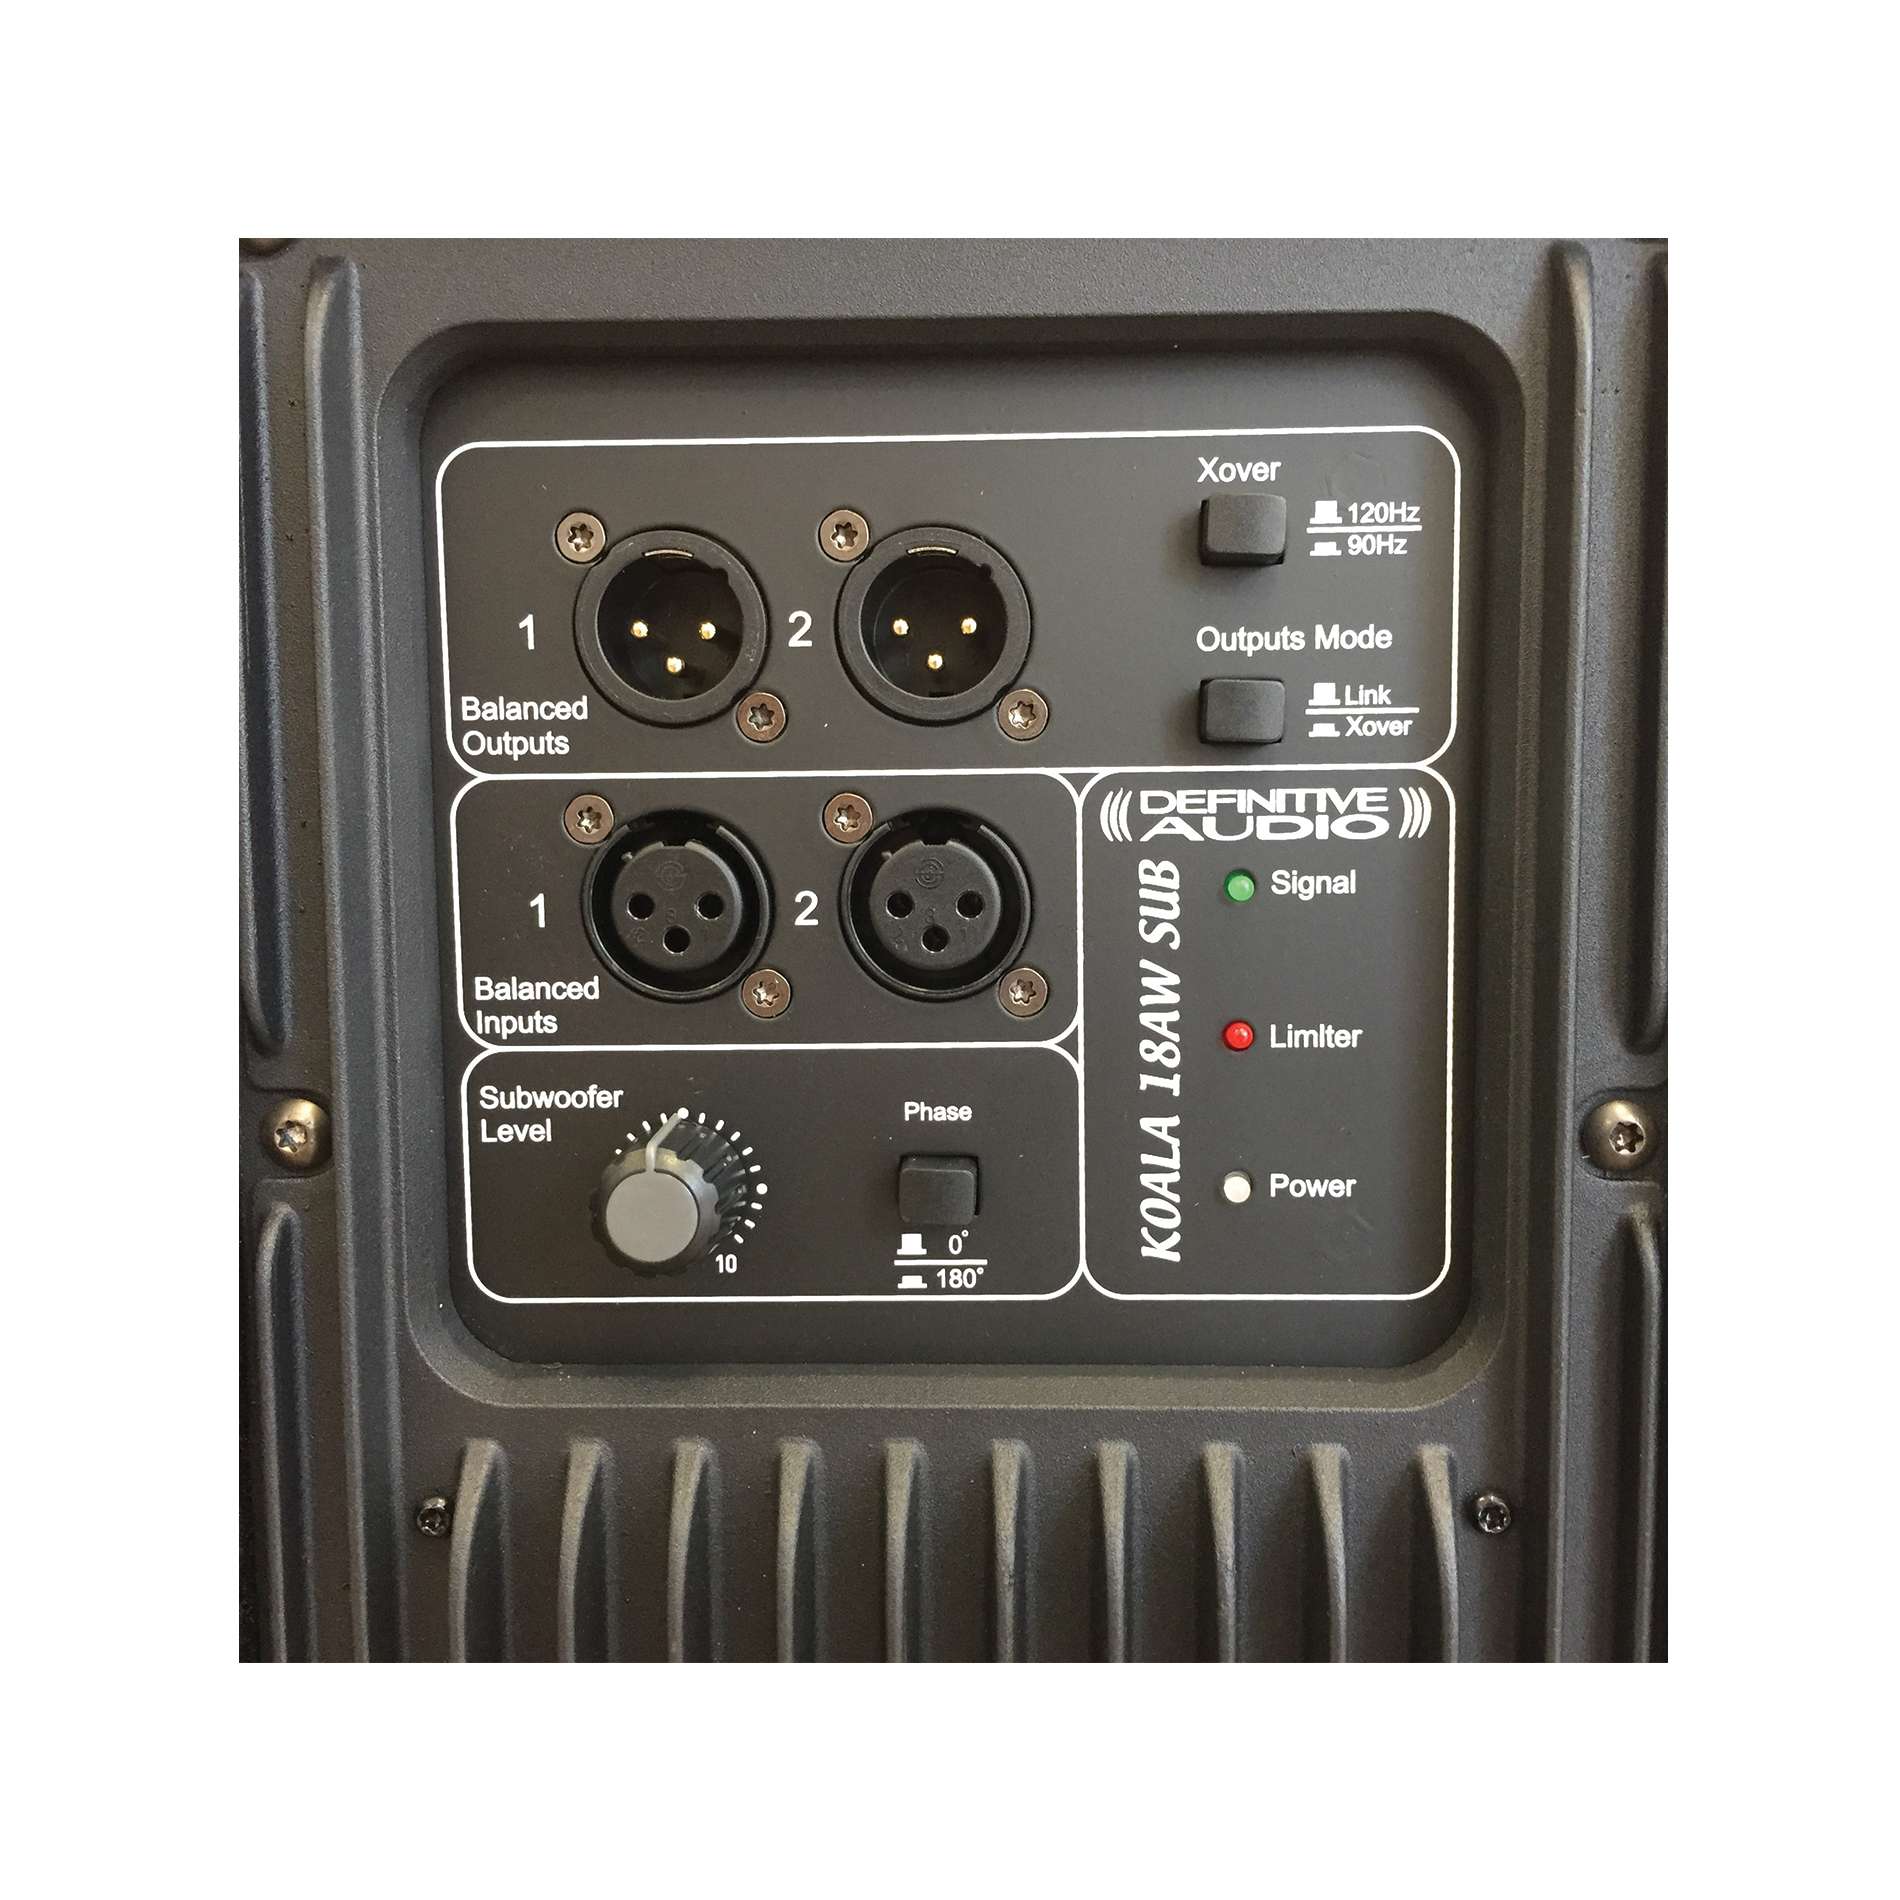 Definitive Audio Koala Neo 3800 Quad - Pa systeem set - Variation 4